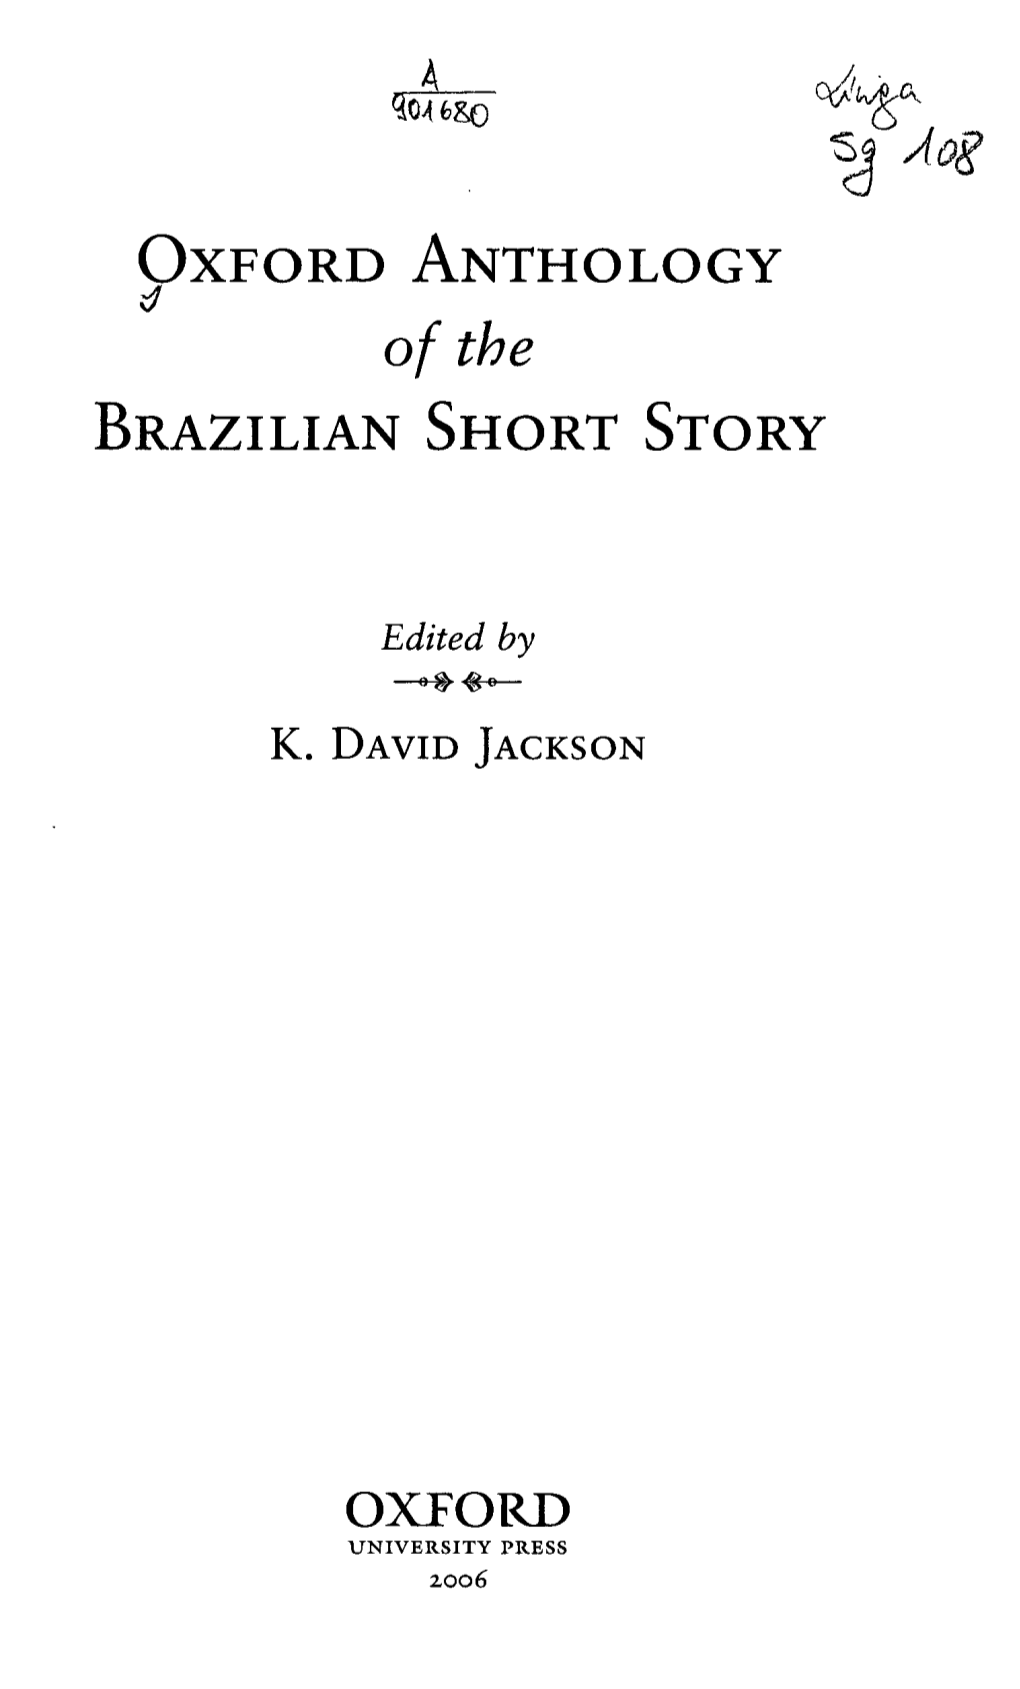 Of the BRAZILIAN SHORT STORY